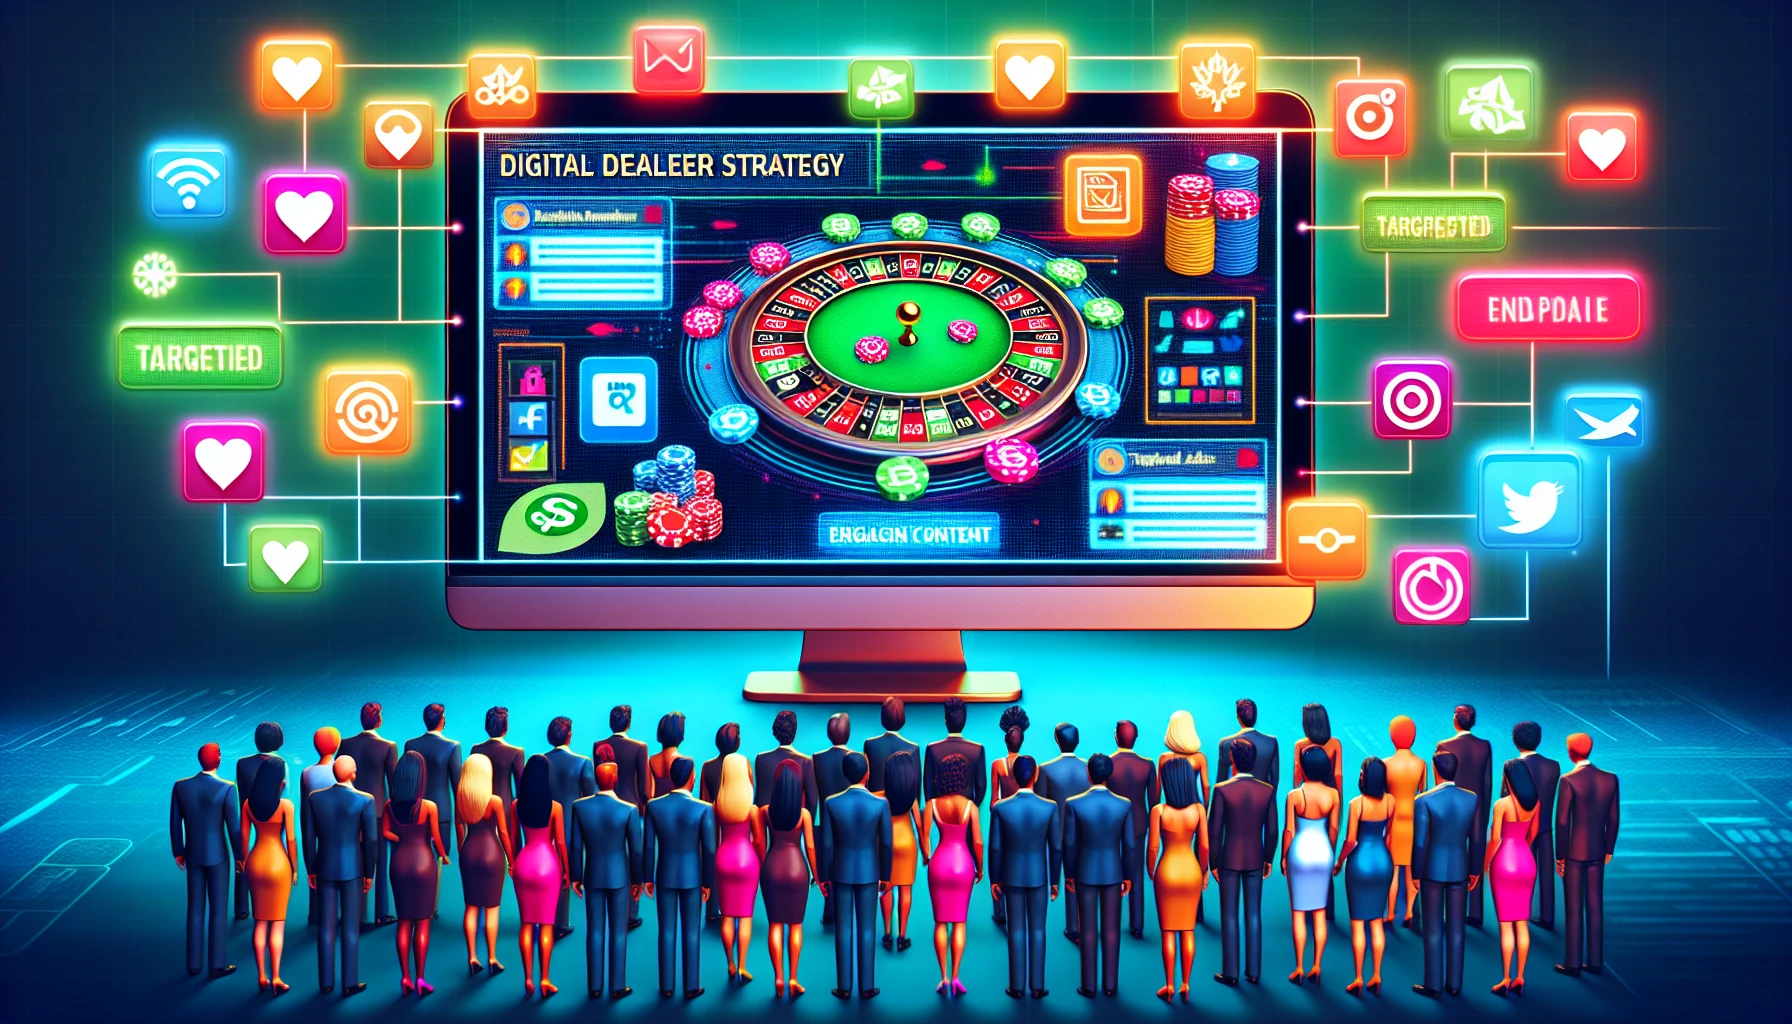 A digital marketing strategy for casino dealer recruitment